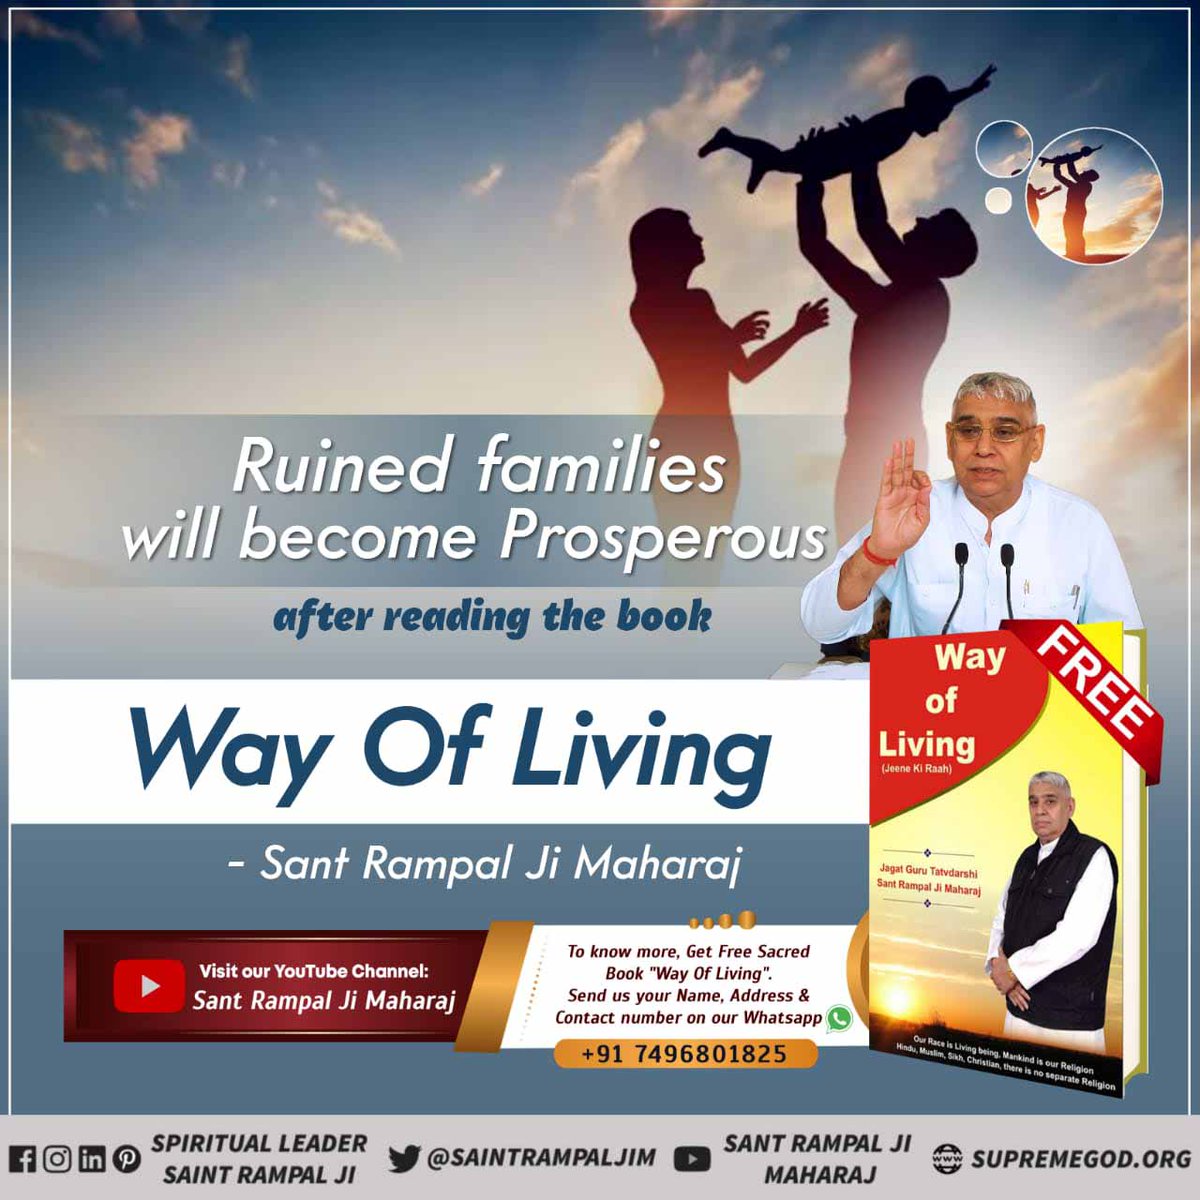 #AudioBook_JeeneKiRah
Running families will become prosperous after reading the book 'WAY OF LIVING '
SantRampalJiMaharaj 
Visit our YouTube channel Satlok Ashram:-